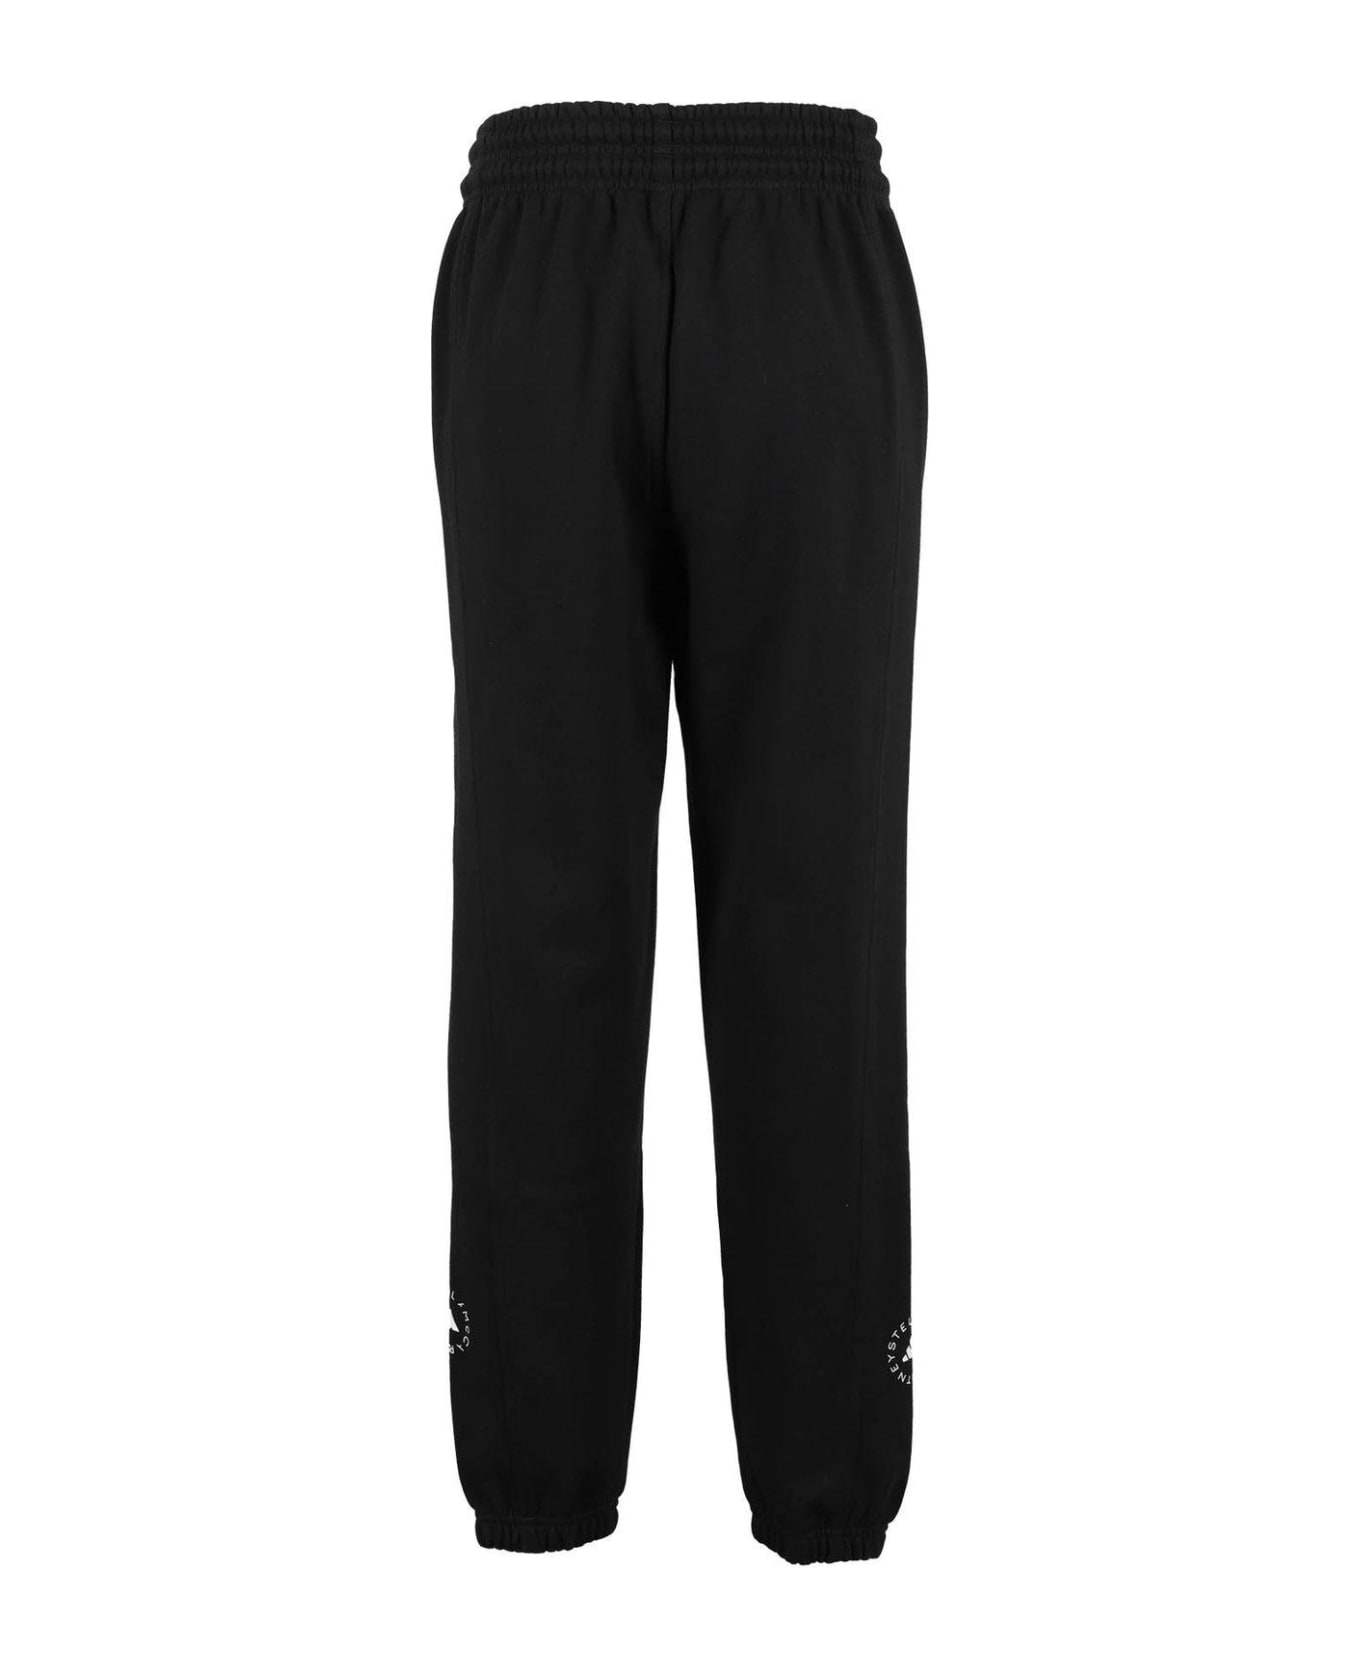 Adidas by Stella McCartney Logo Printed Drawstring Track Pants - Black